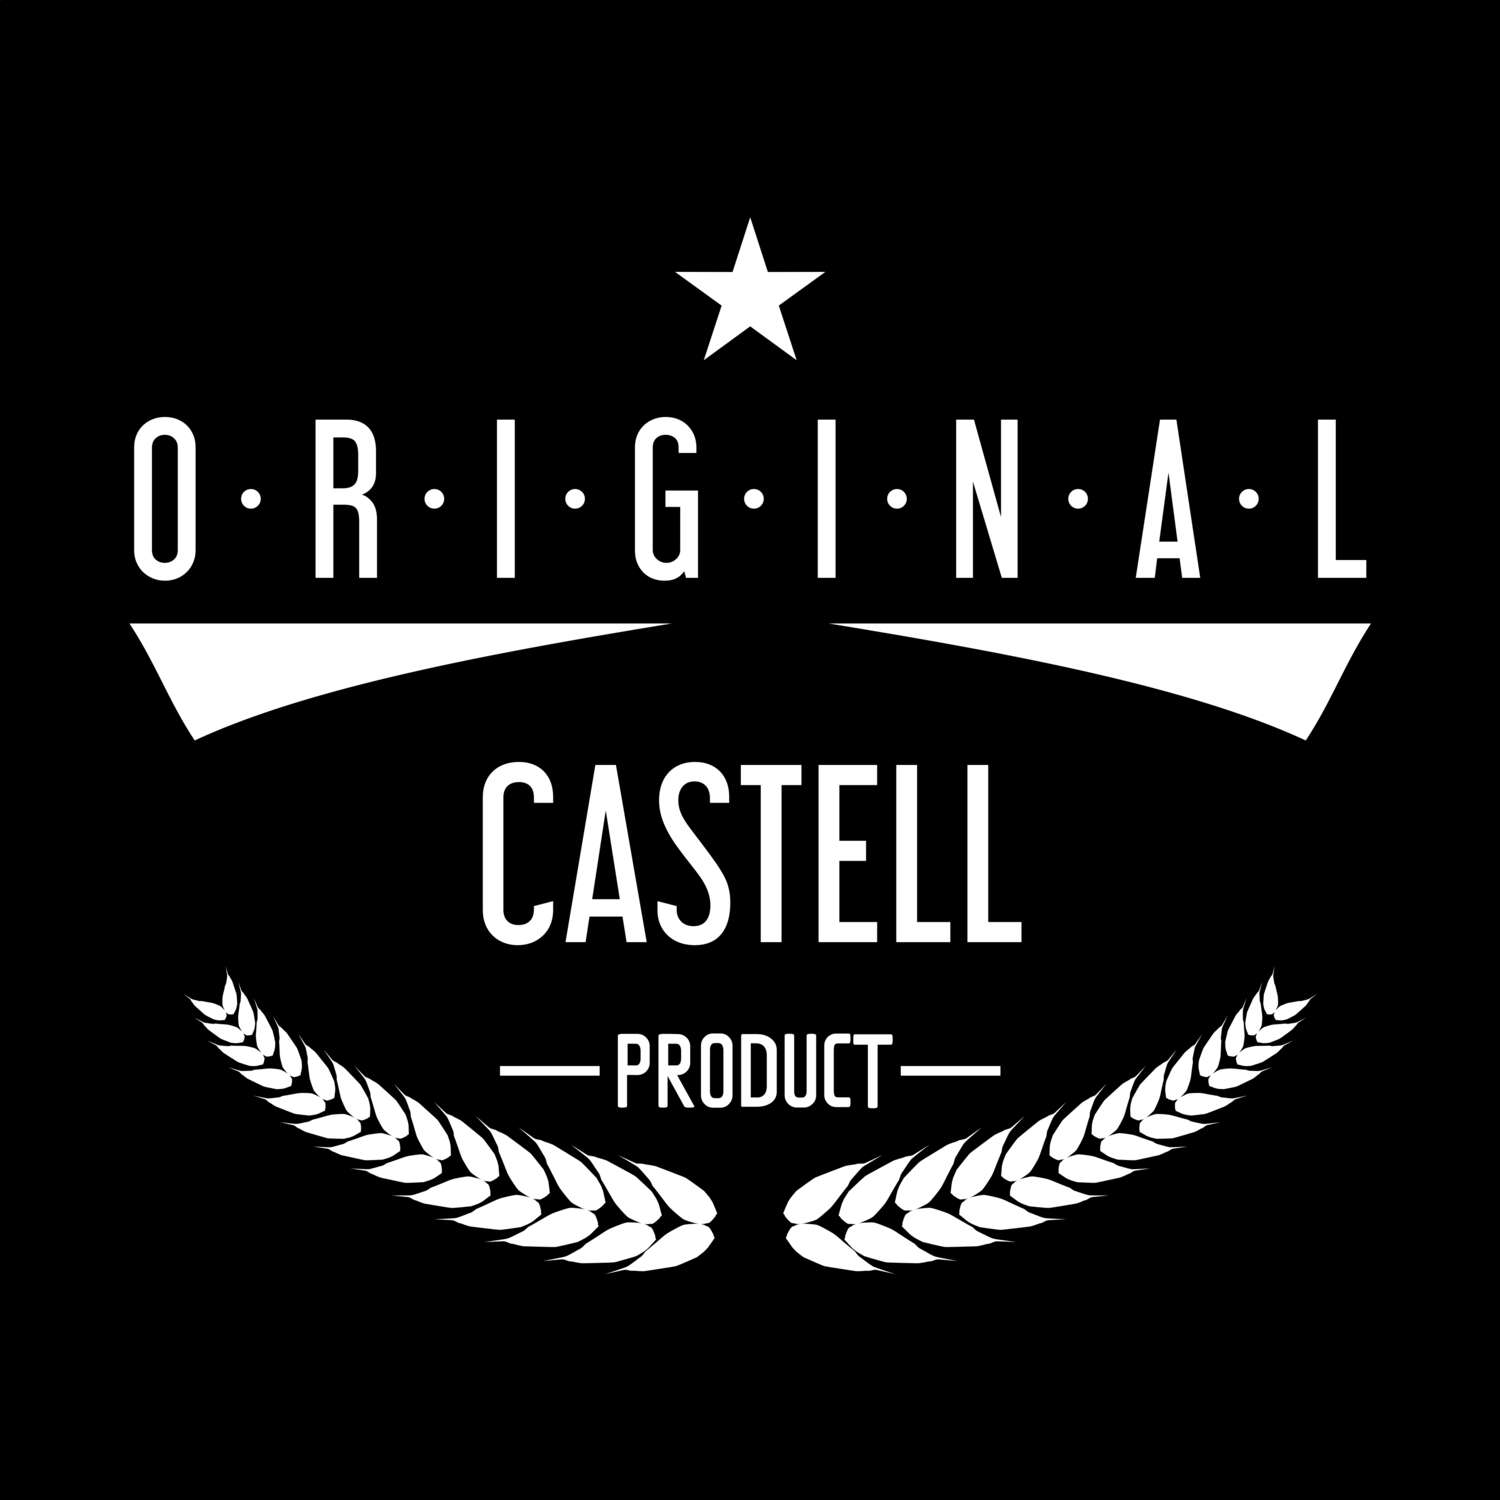 Castell T-Shirt »Original Product«